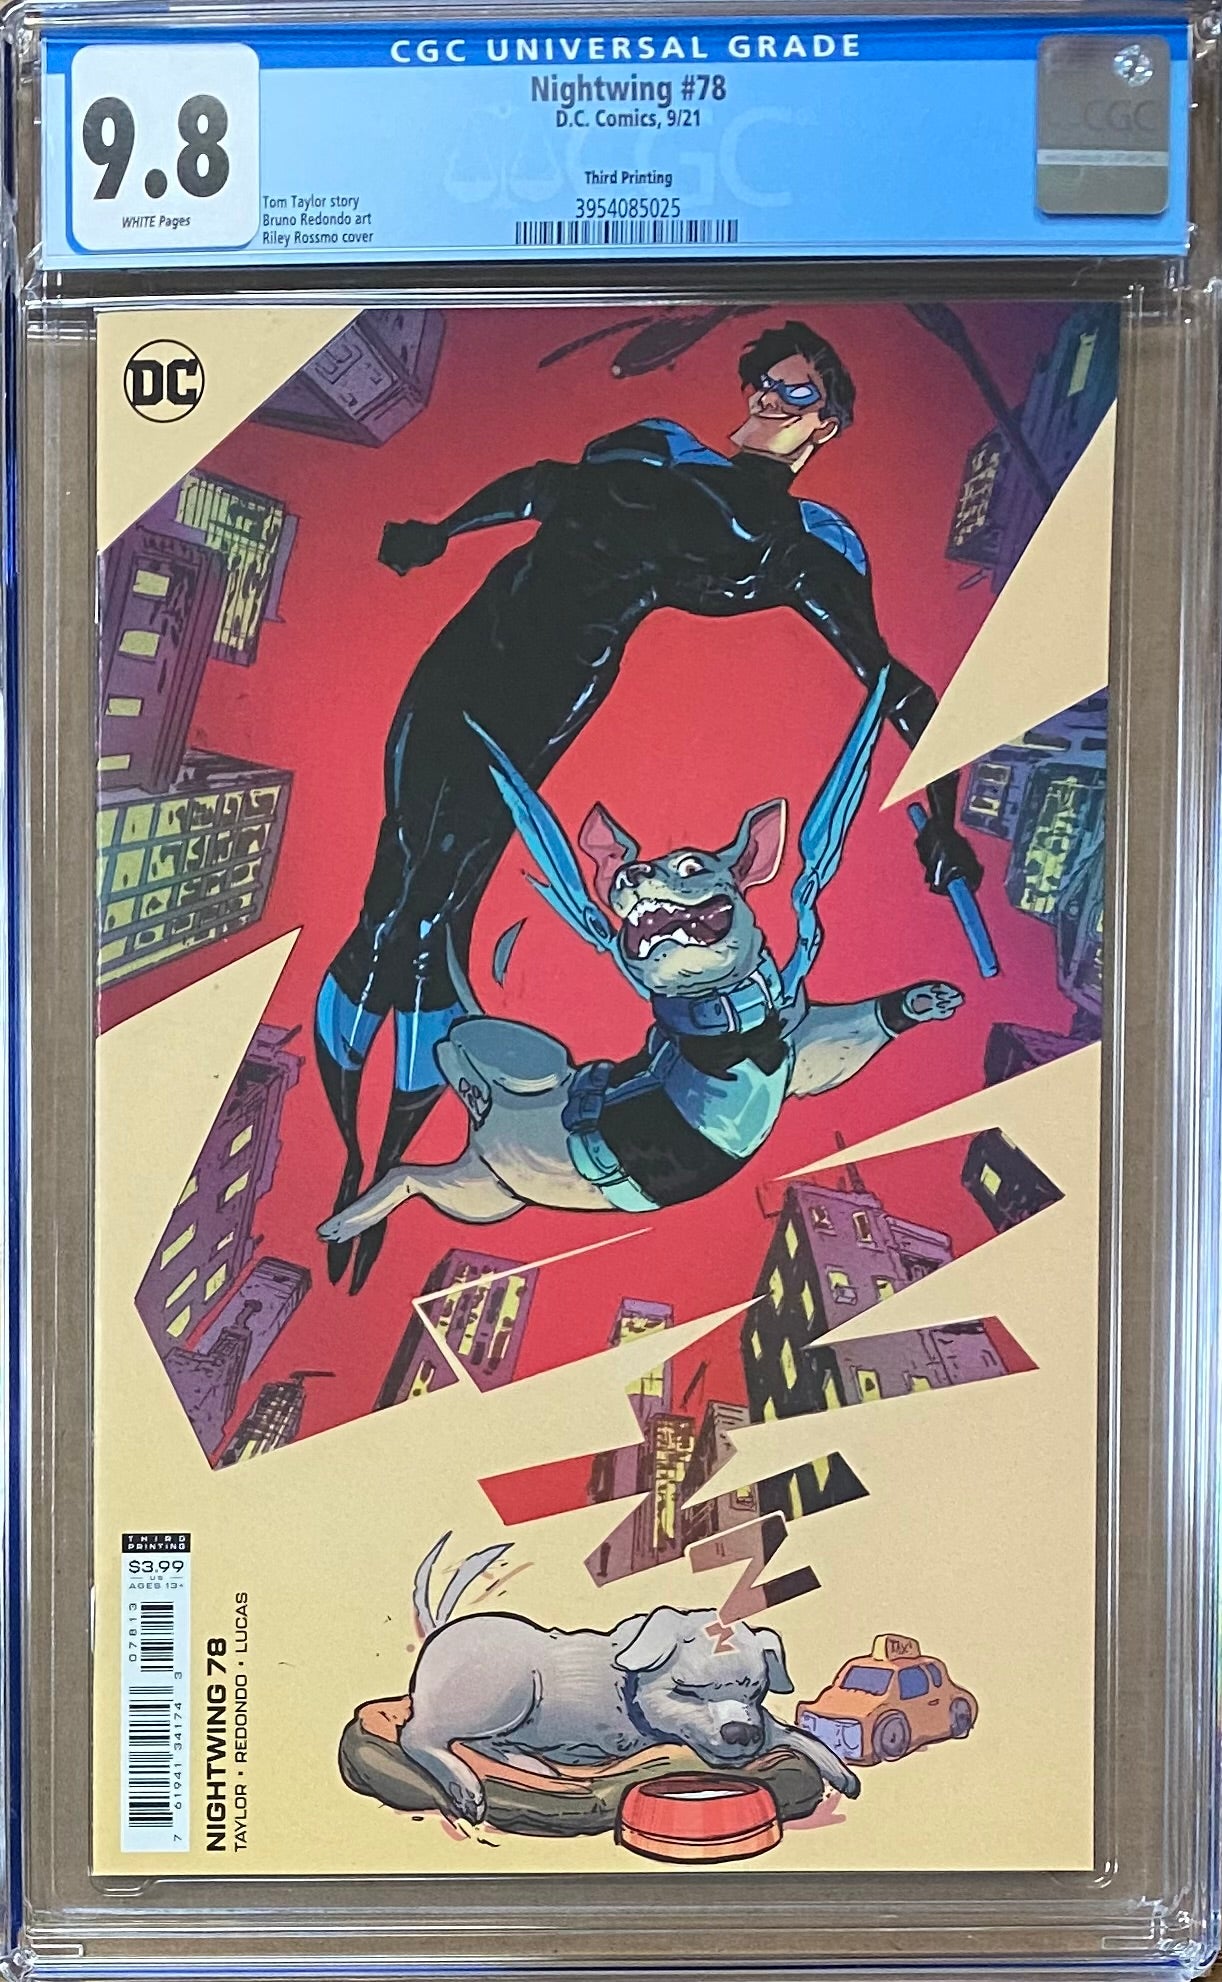 Nightwing #78 Third Printing CGC 9.8